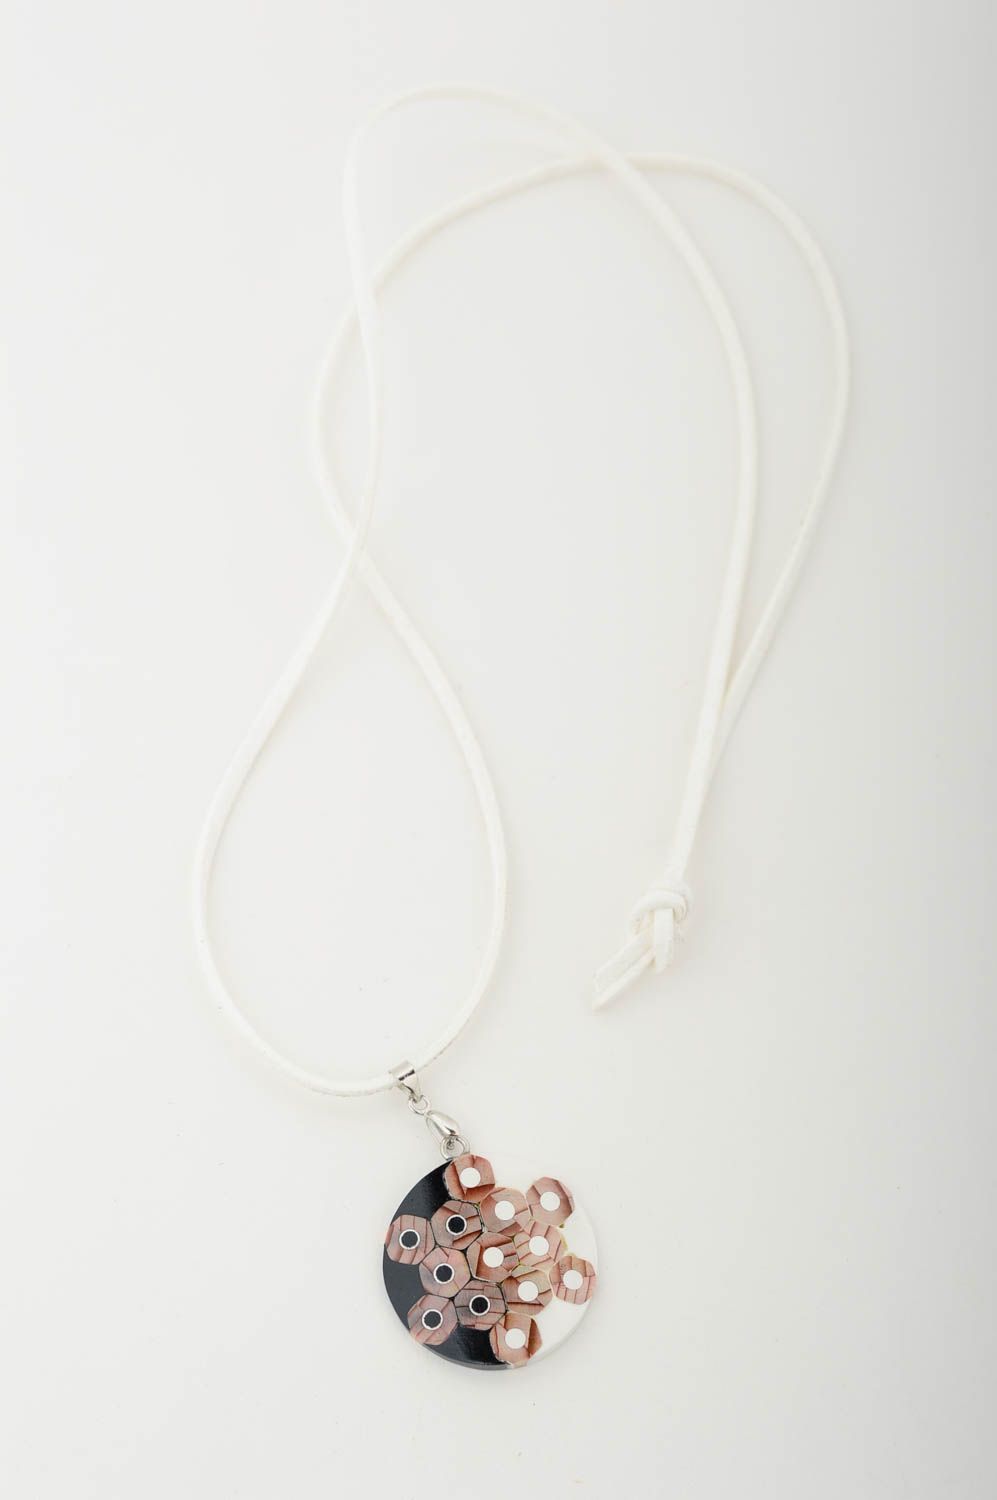 Handmade pendant unusual gift designer jewelry wooden pendant gift for her photo 3